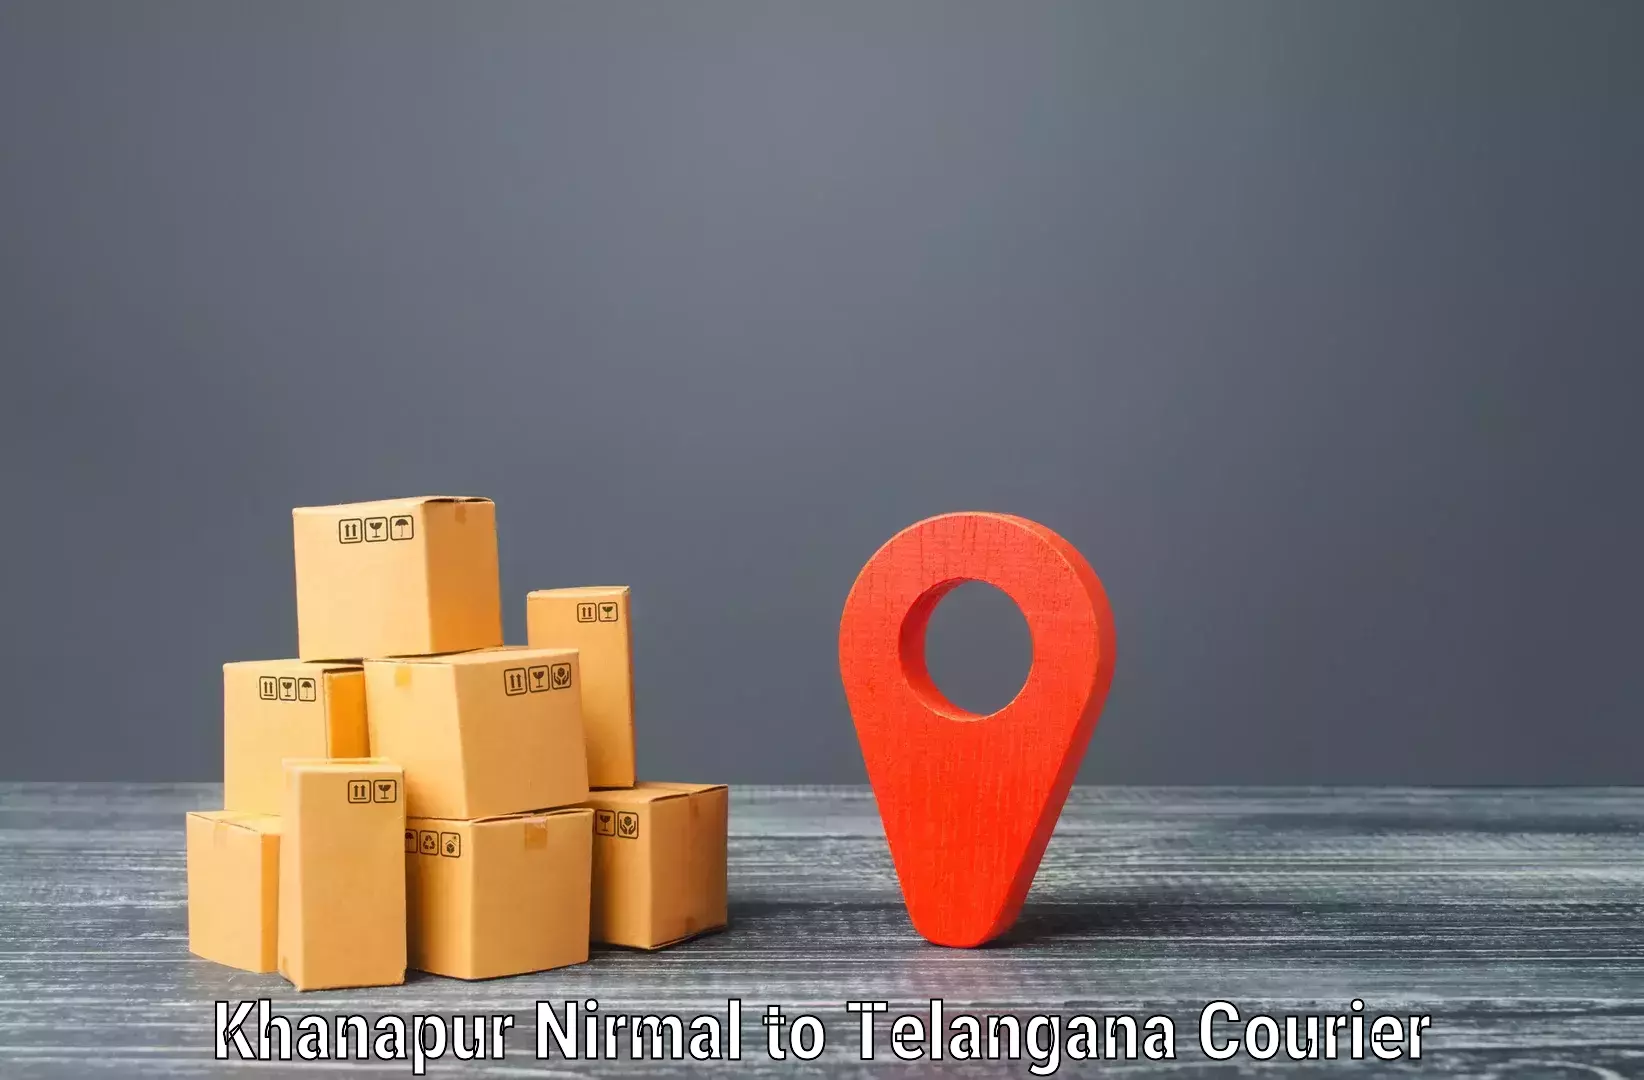 Full-service courier options Khanapur Nirmal to Eligedu